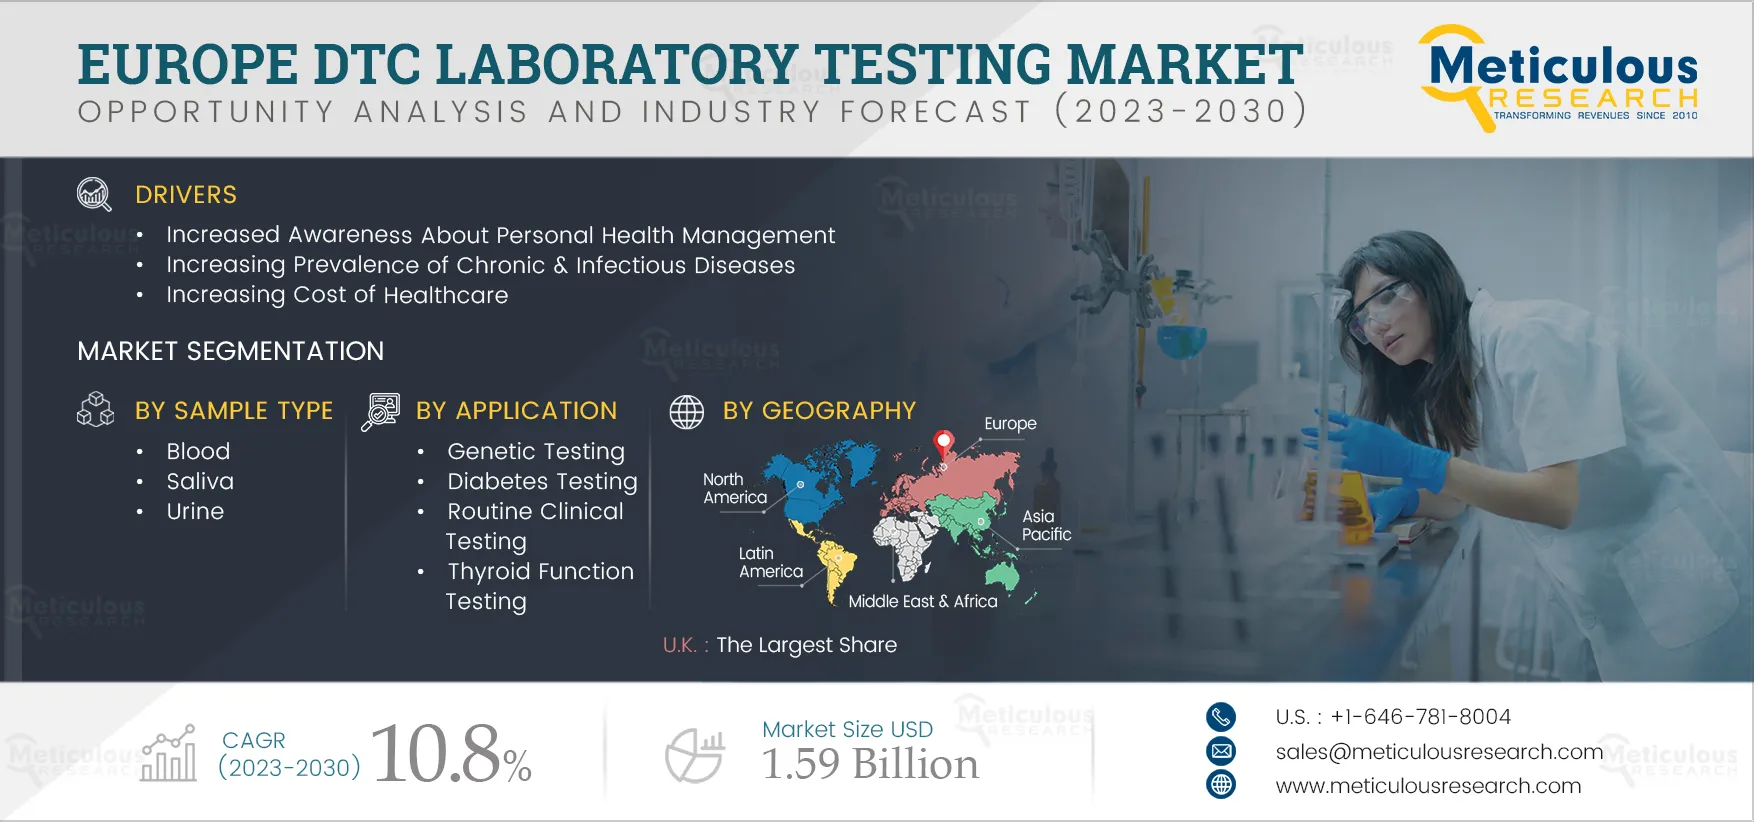 Europe DTC Laboratory Testing Market